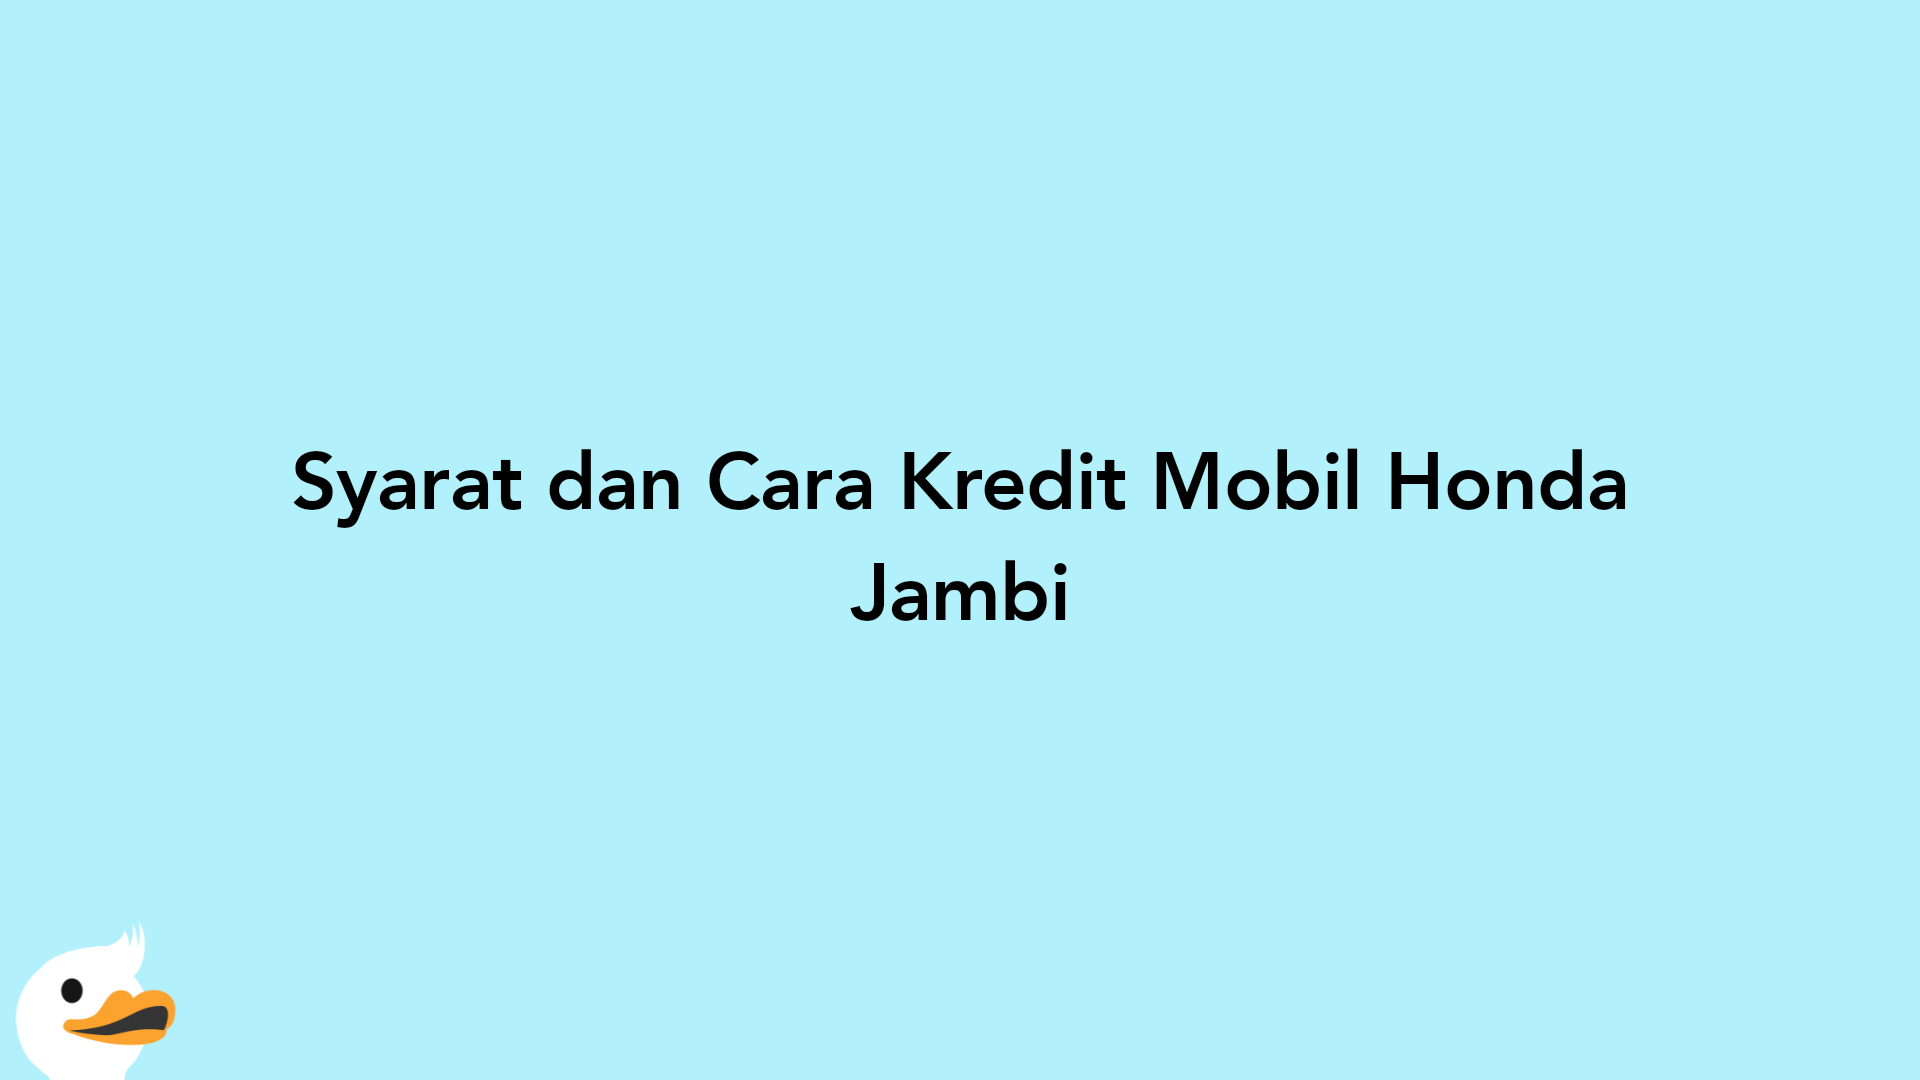 Syarat dan Cara Kredit Mobil Honda Jambi